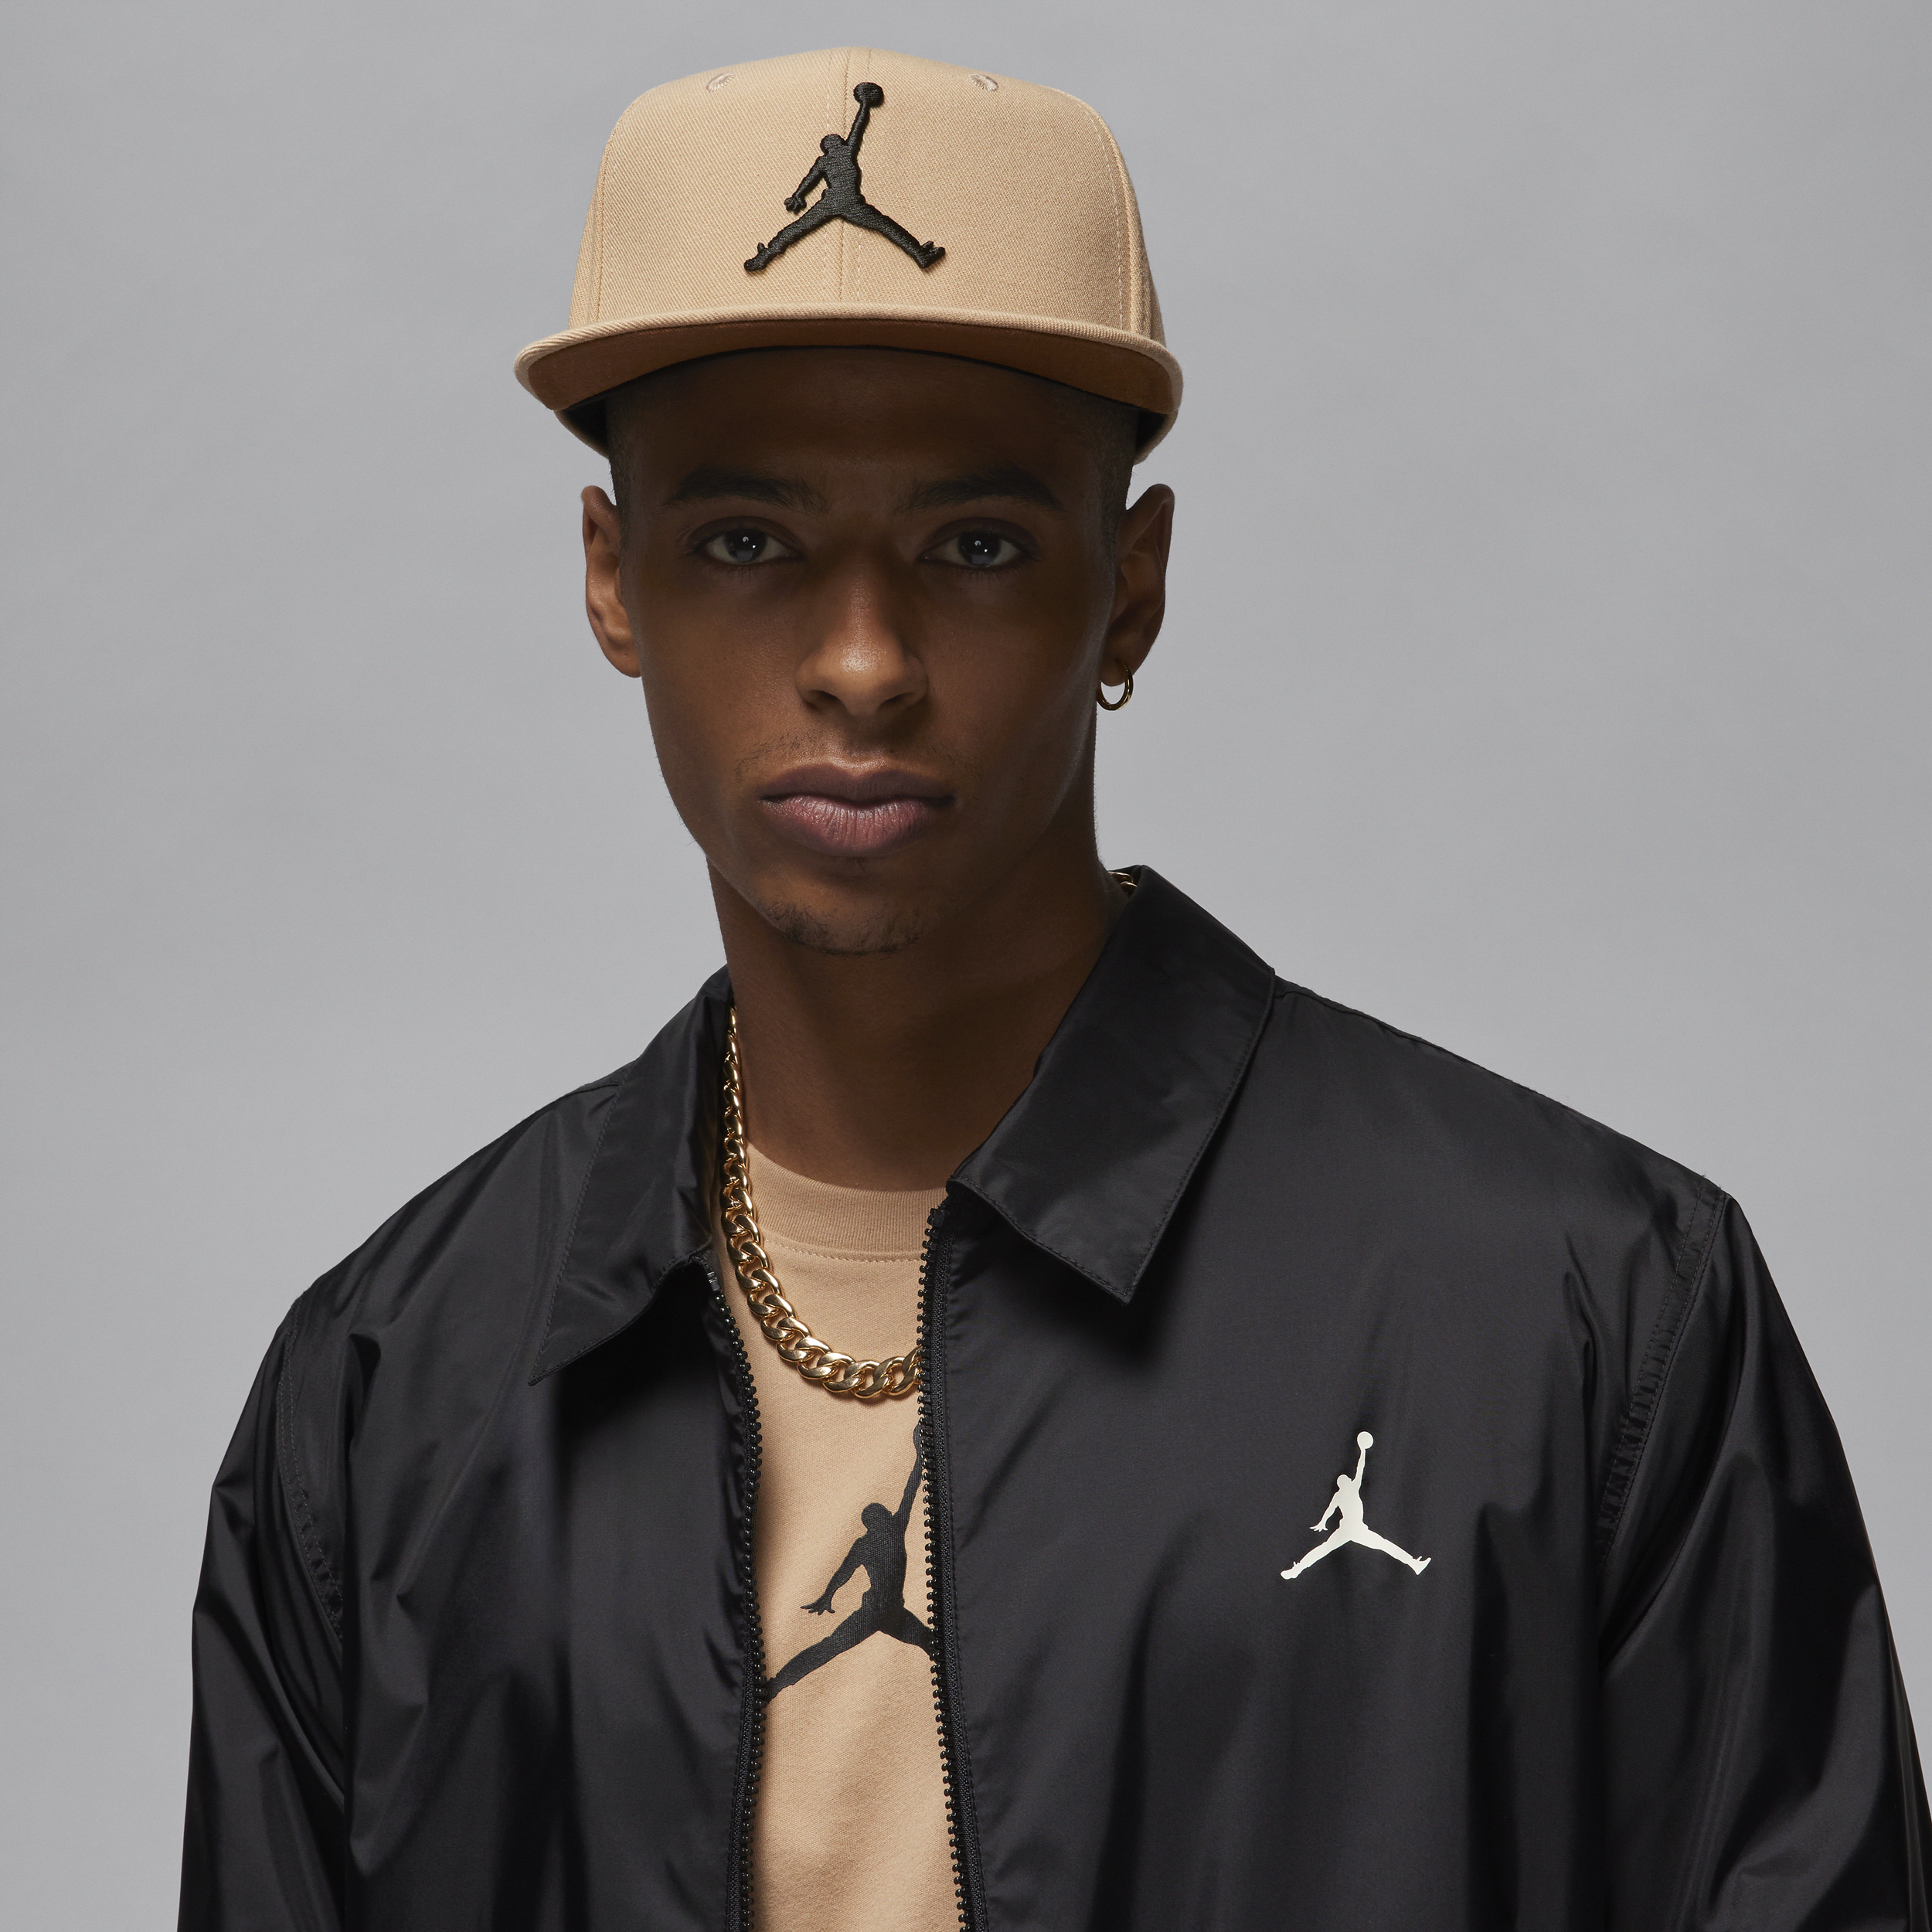 Jordan Pro Cap Adjustable Hat In Brown